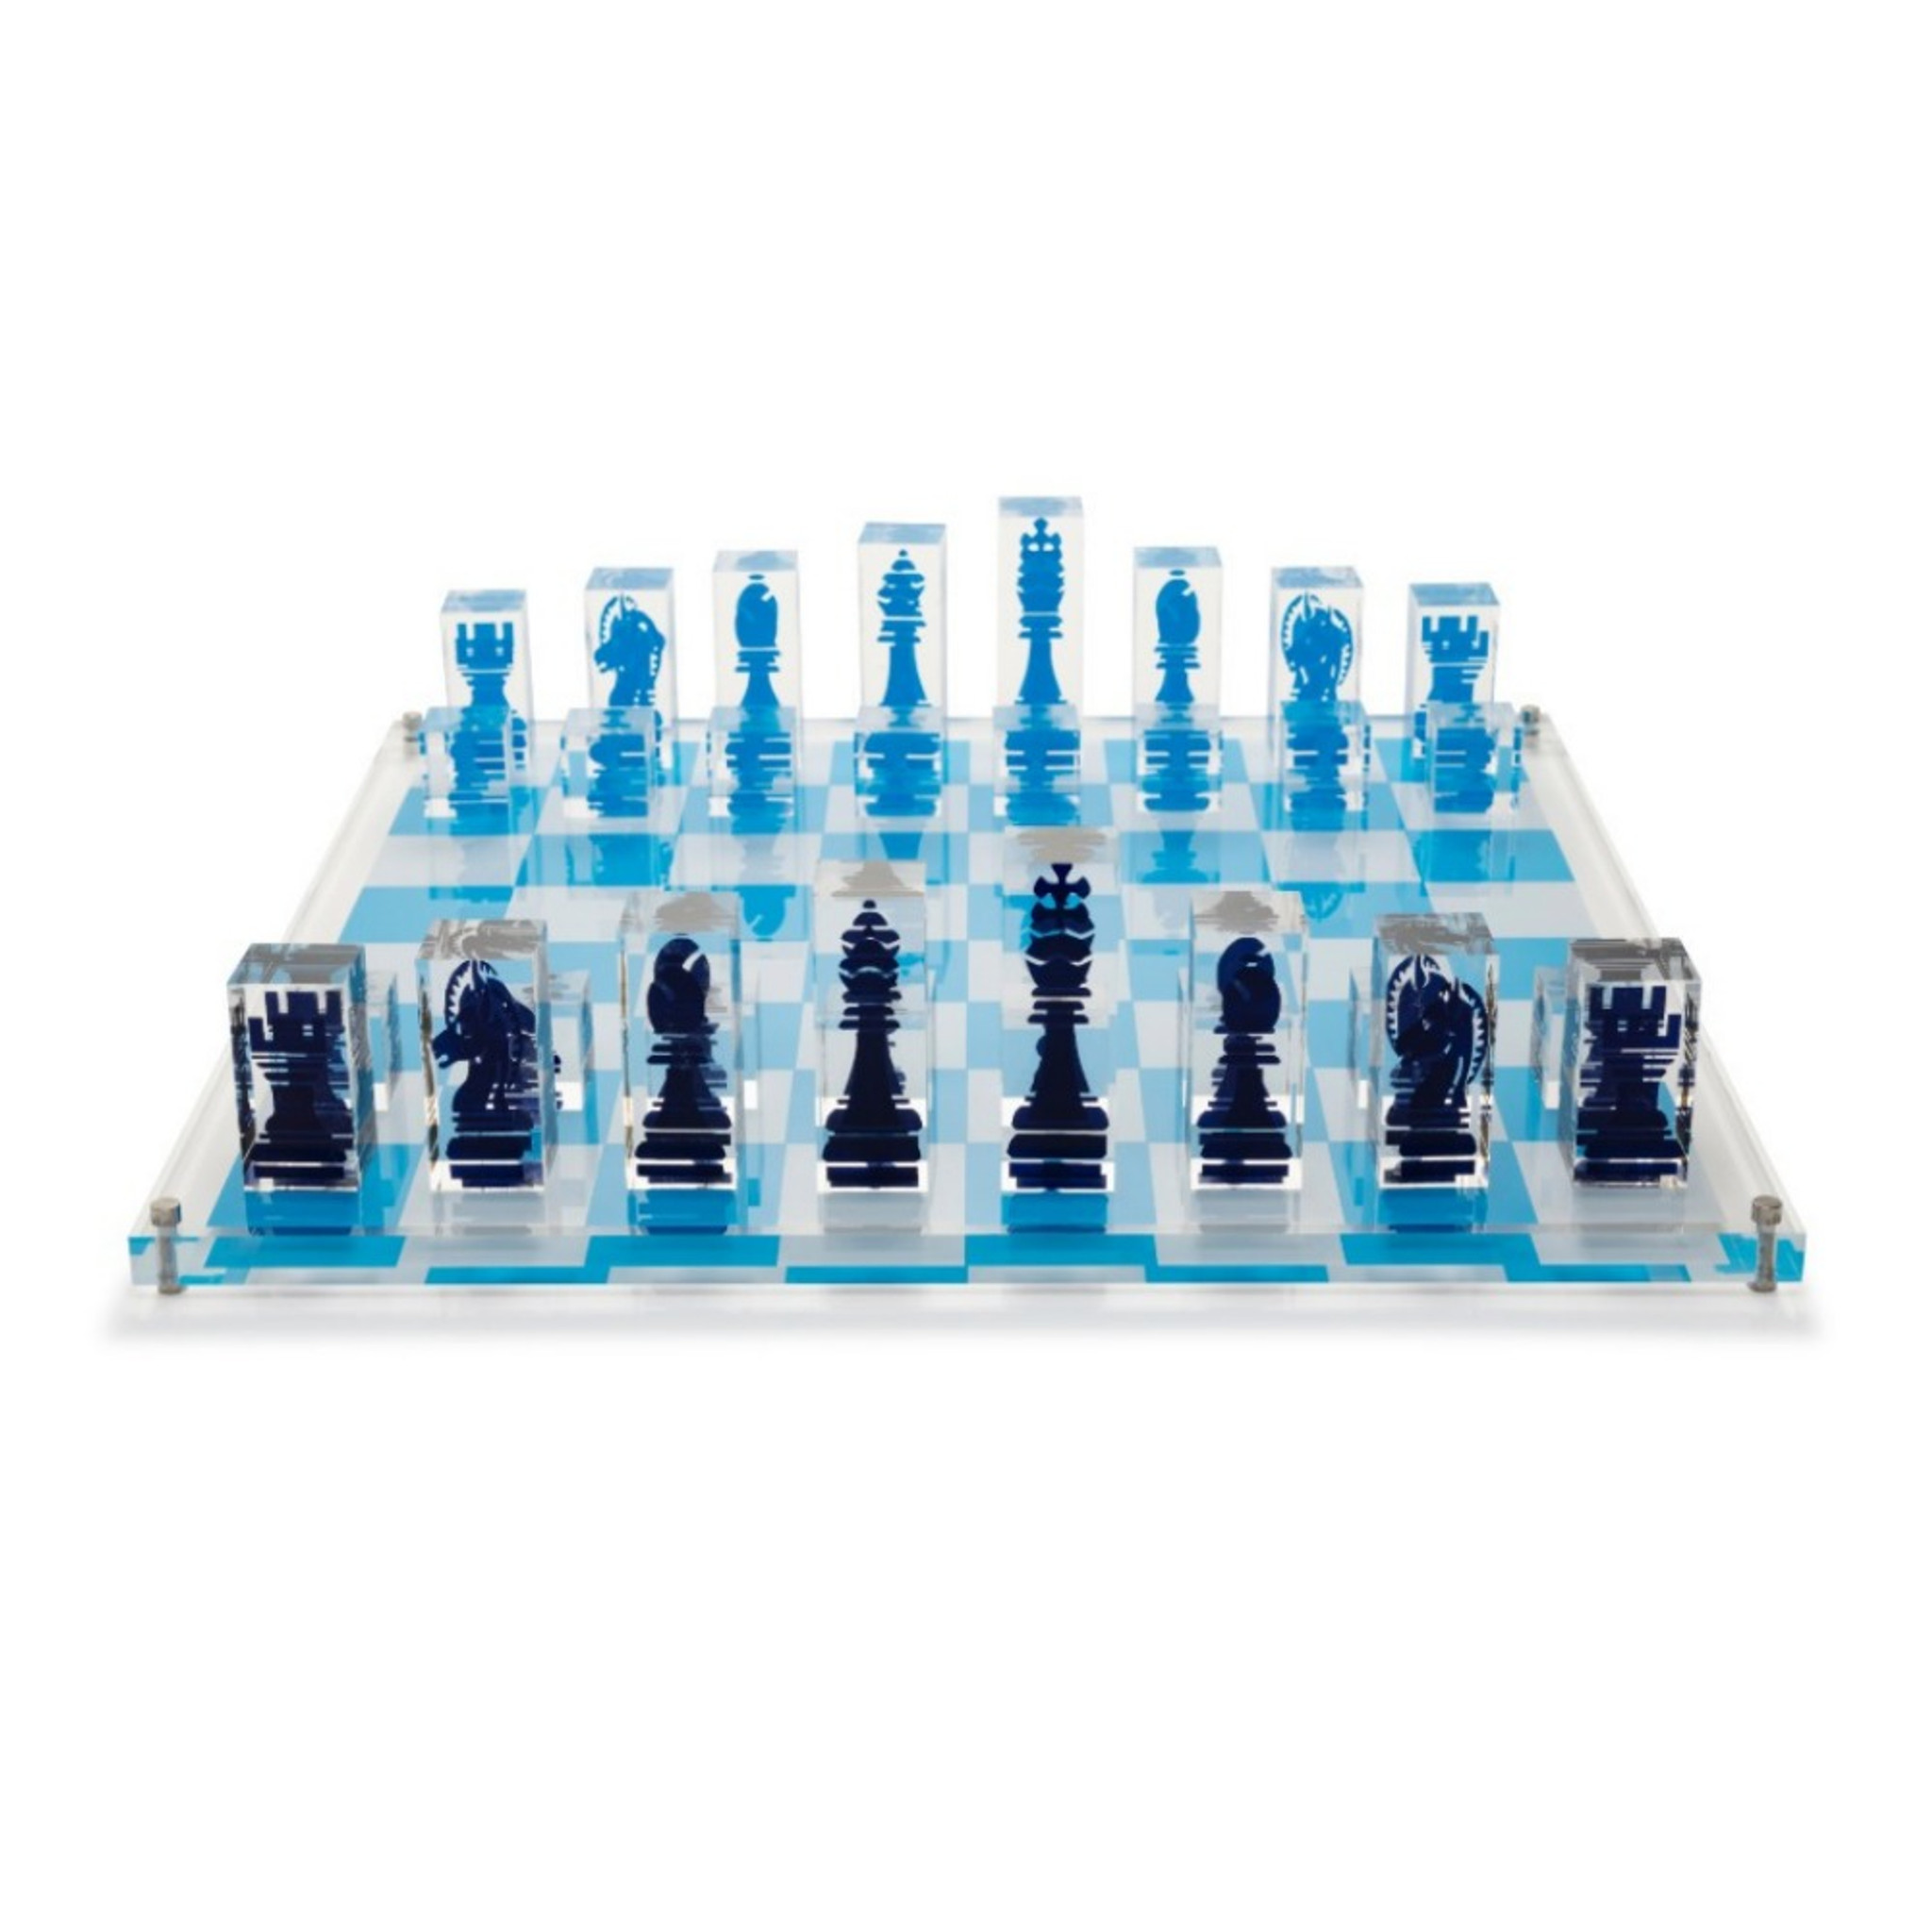 Acrylic Navy and Light Blue Chess Set